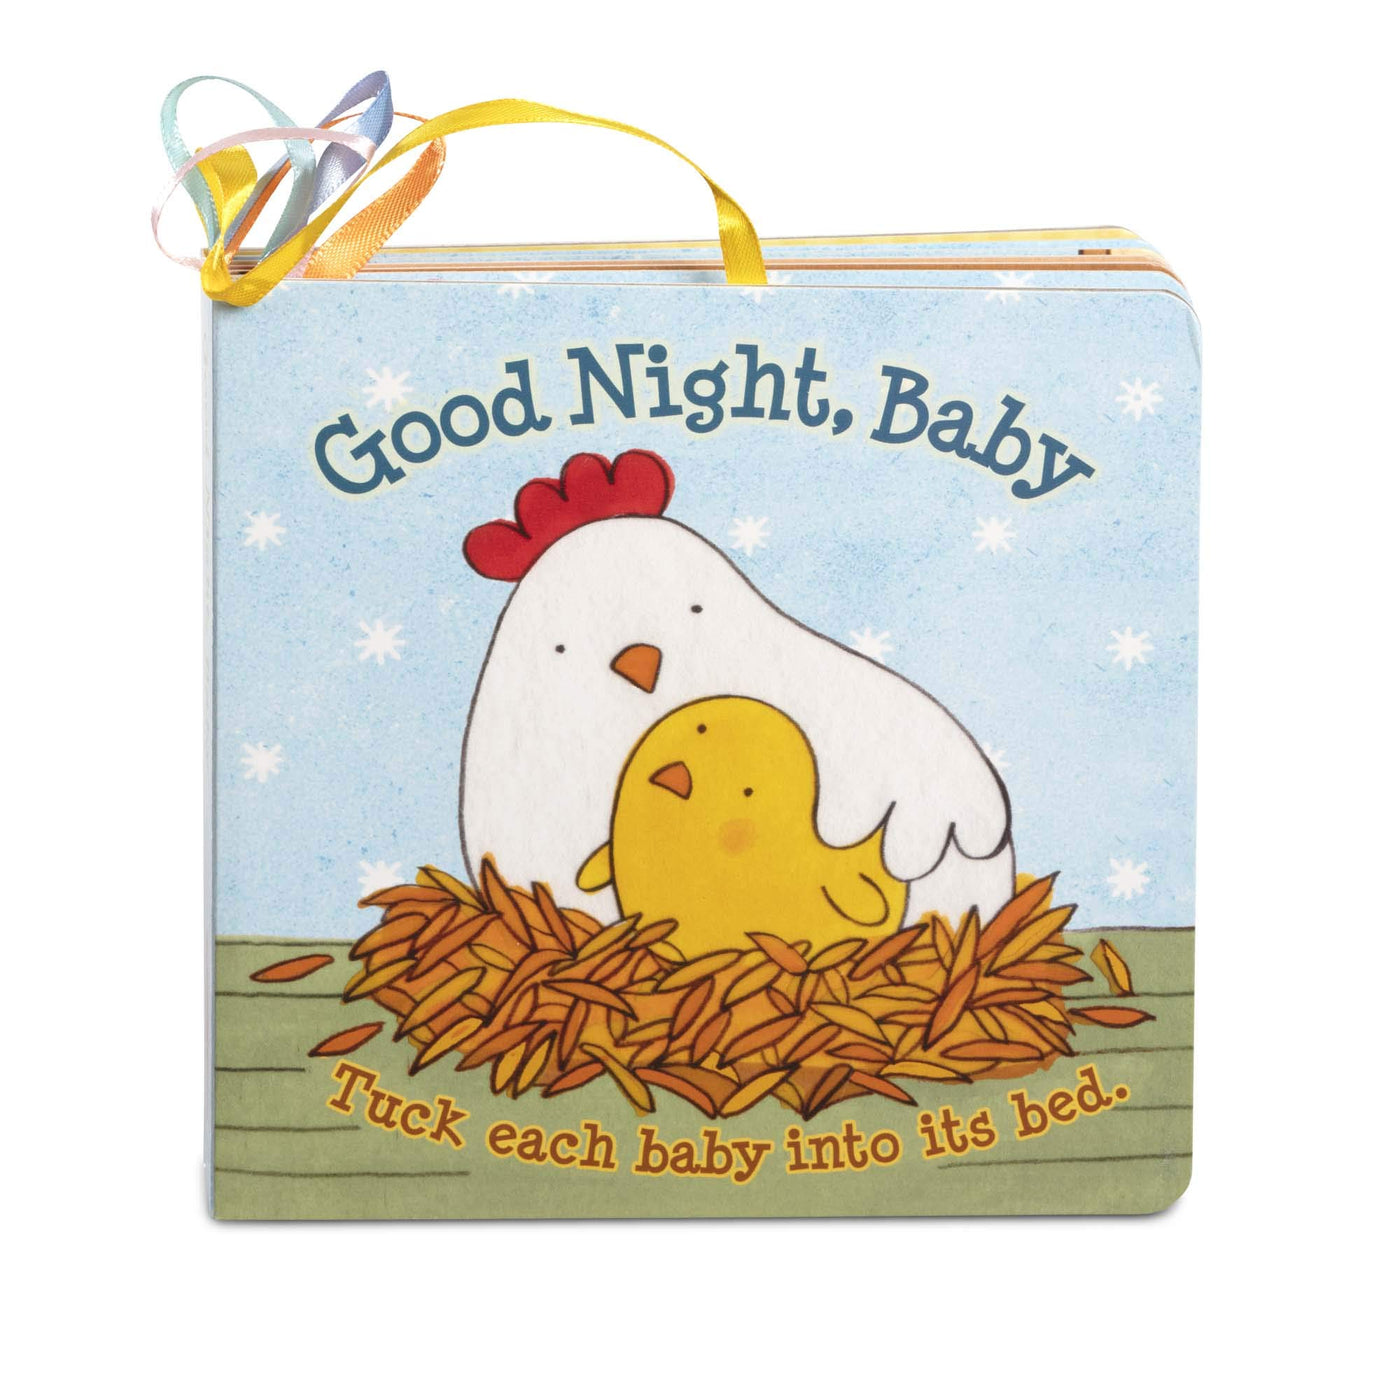 Goodnight baby book